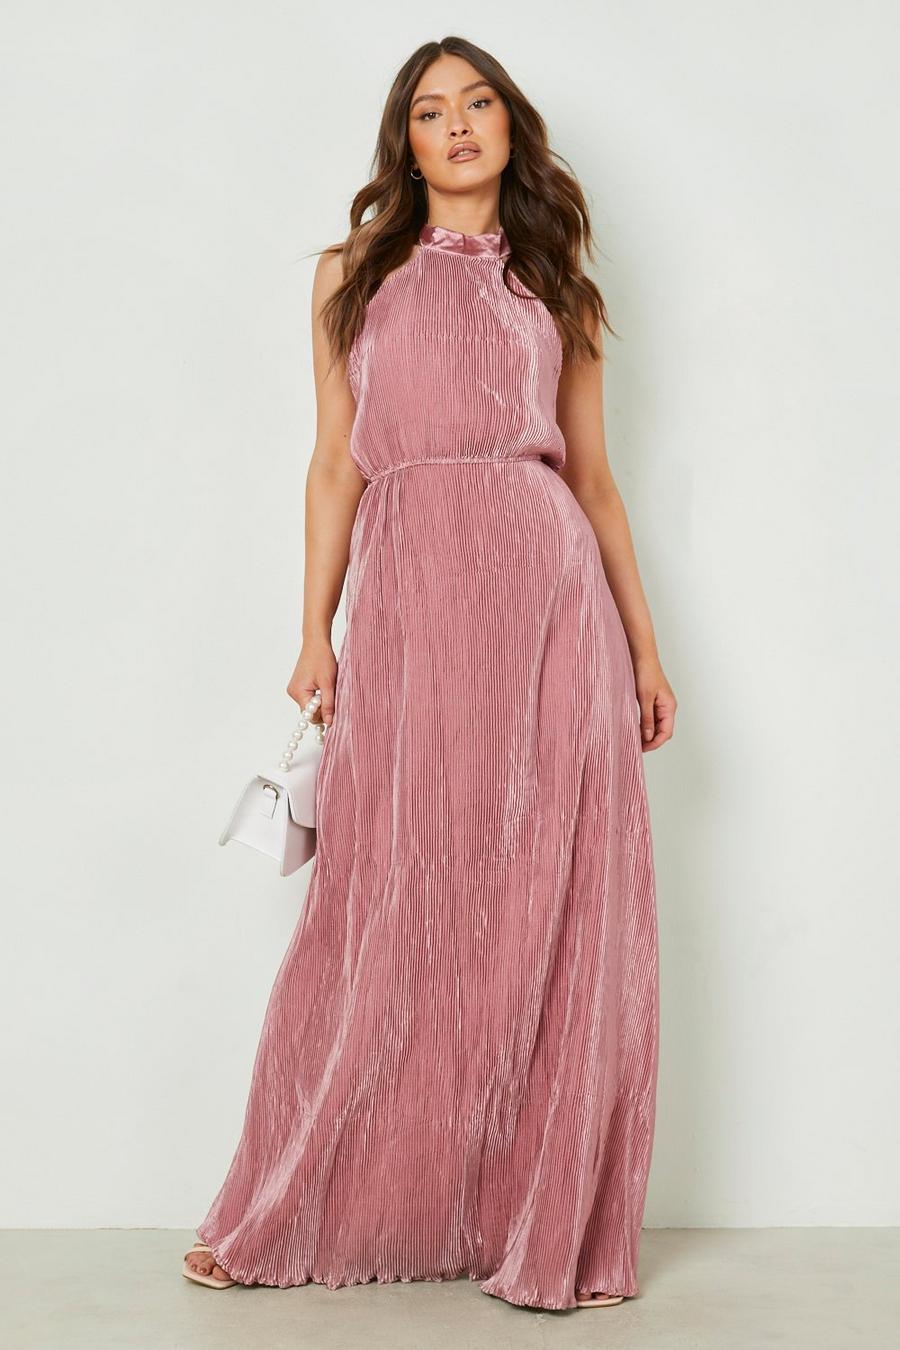 Blush rosa Halterneck Mix And Match Bridesmaids Dress